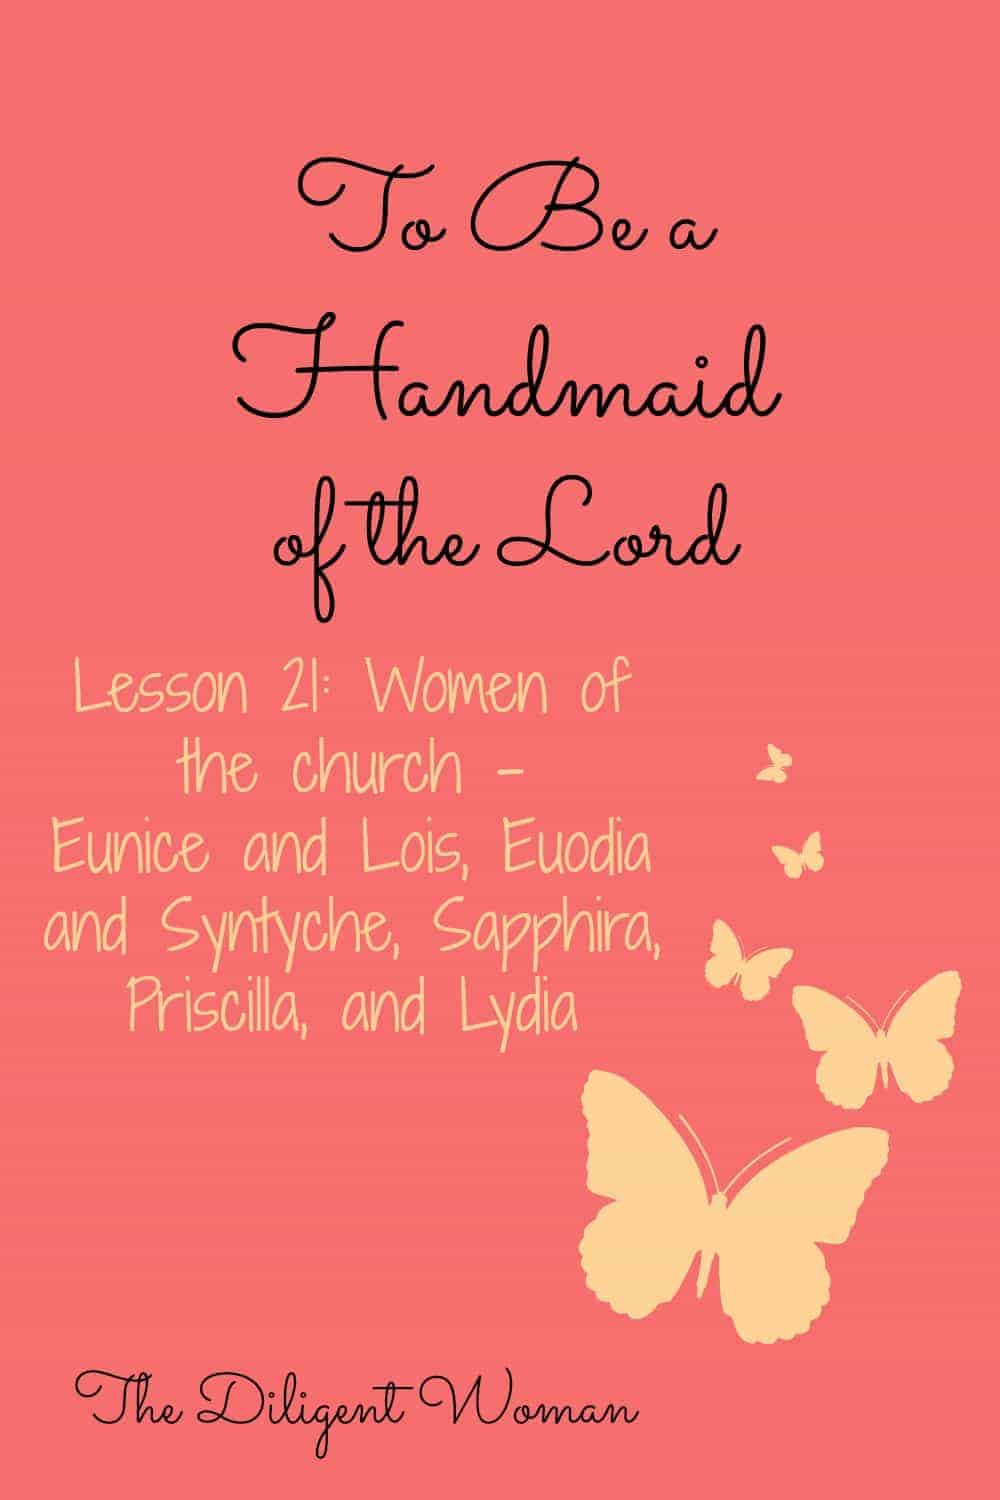 Women of the church